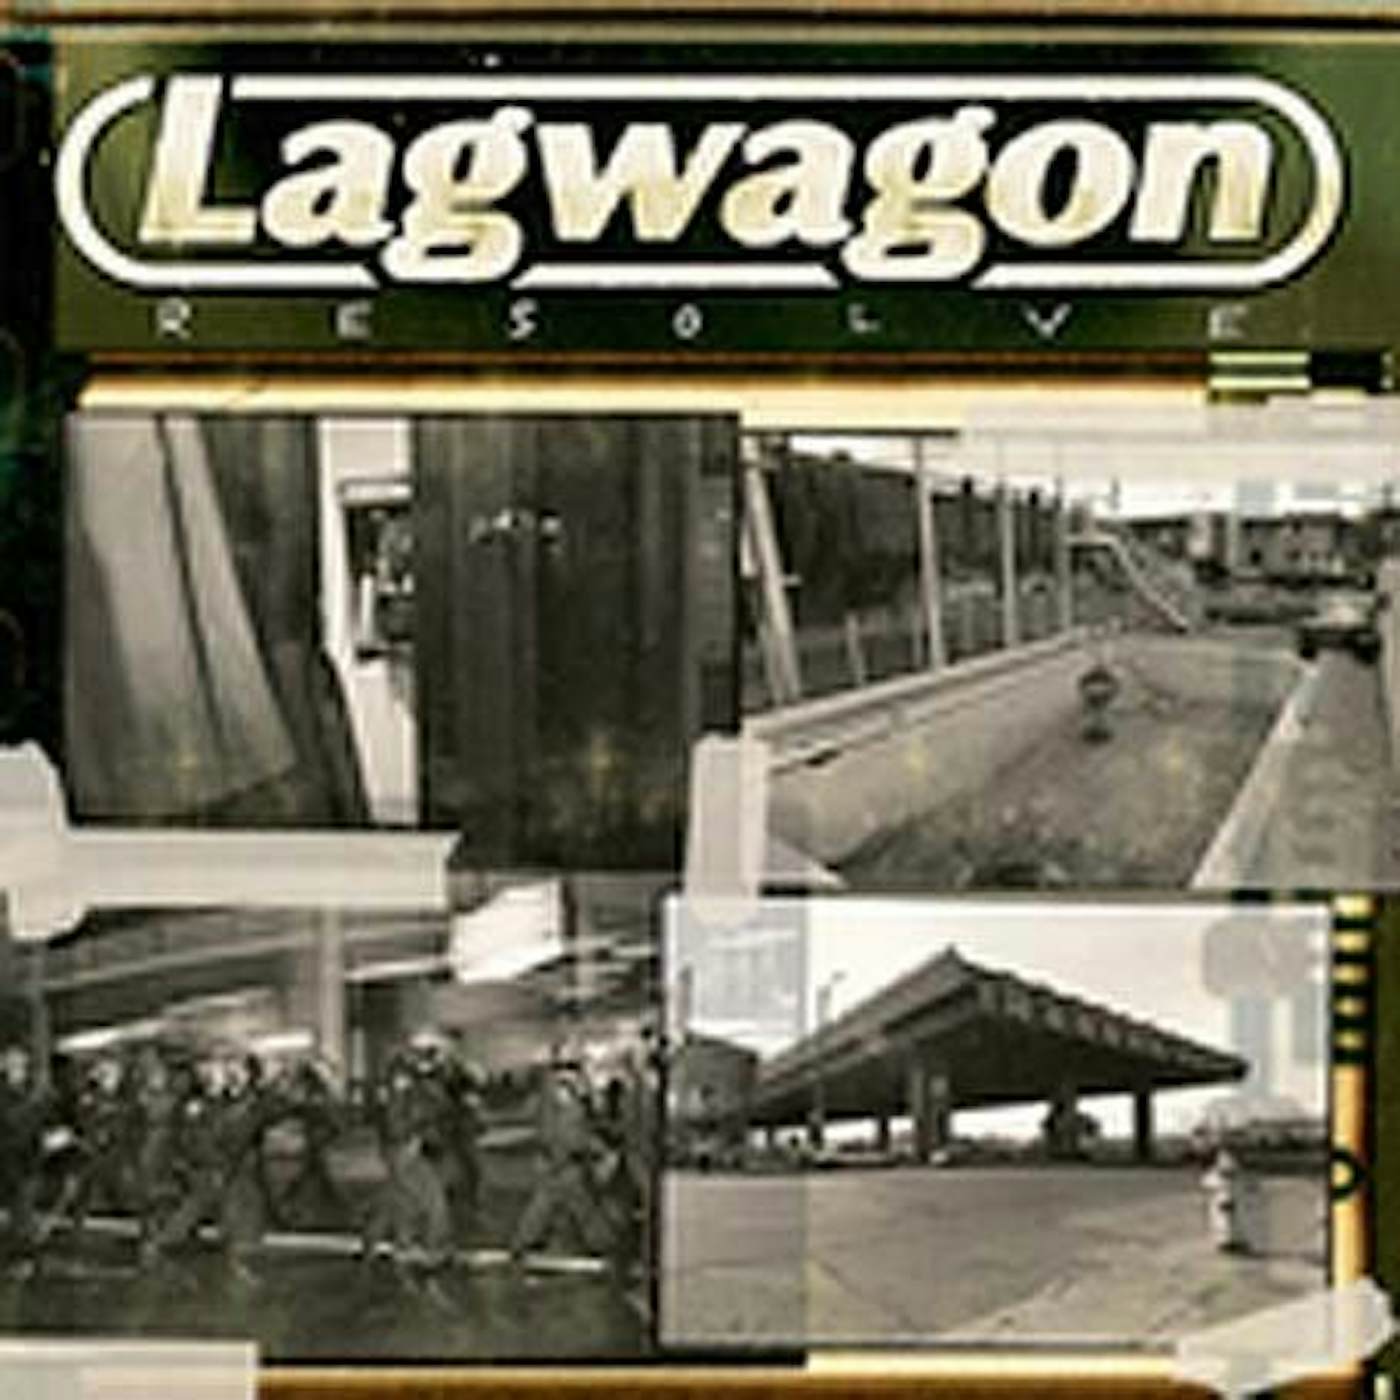 Lagwagon Resolve Vinyl Record